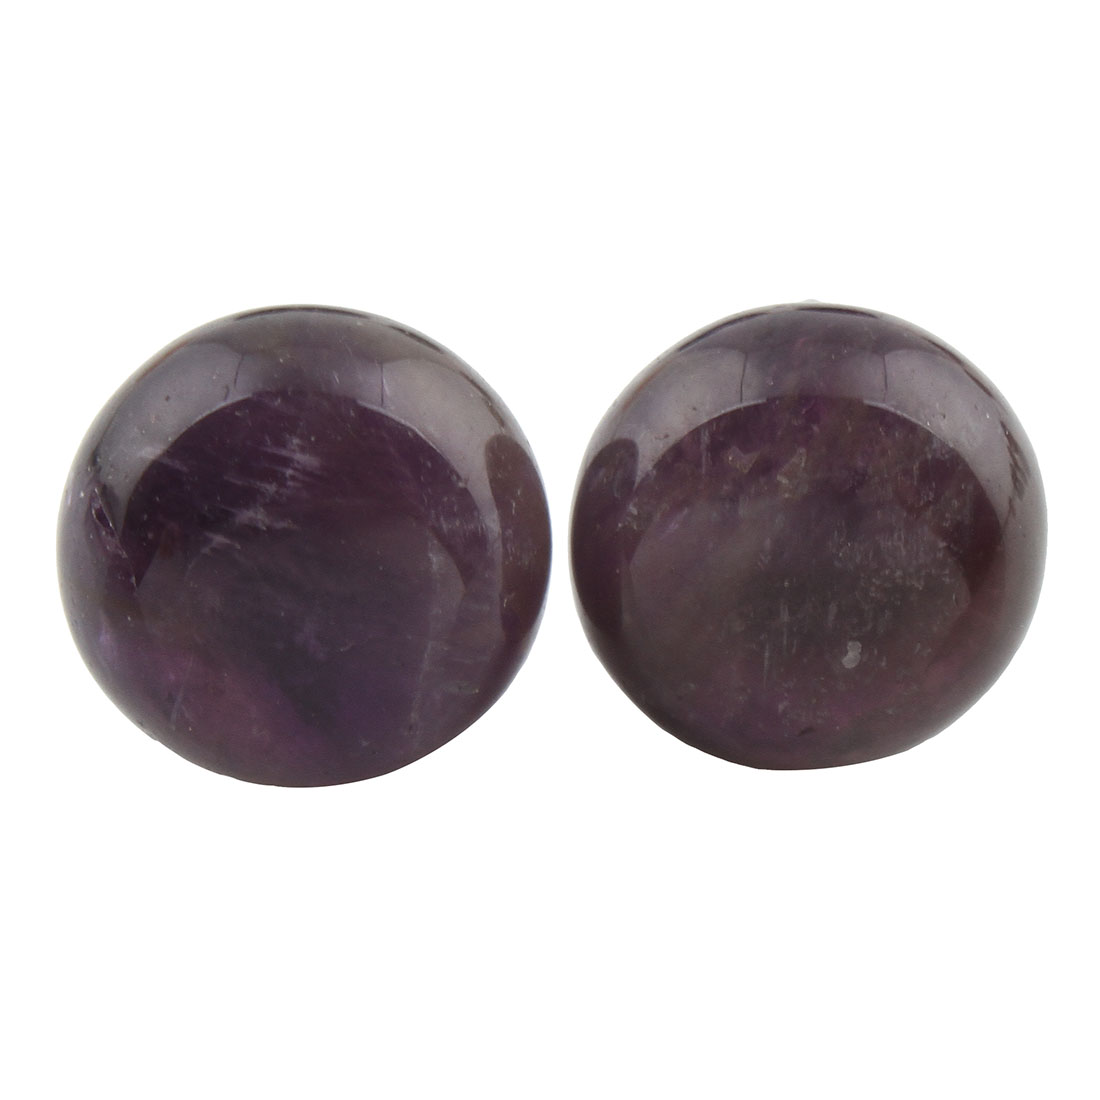 3 purple agate